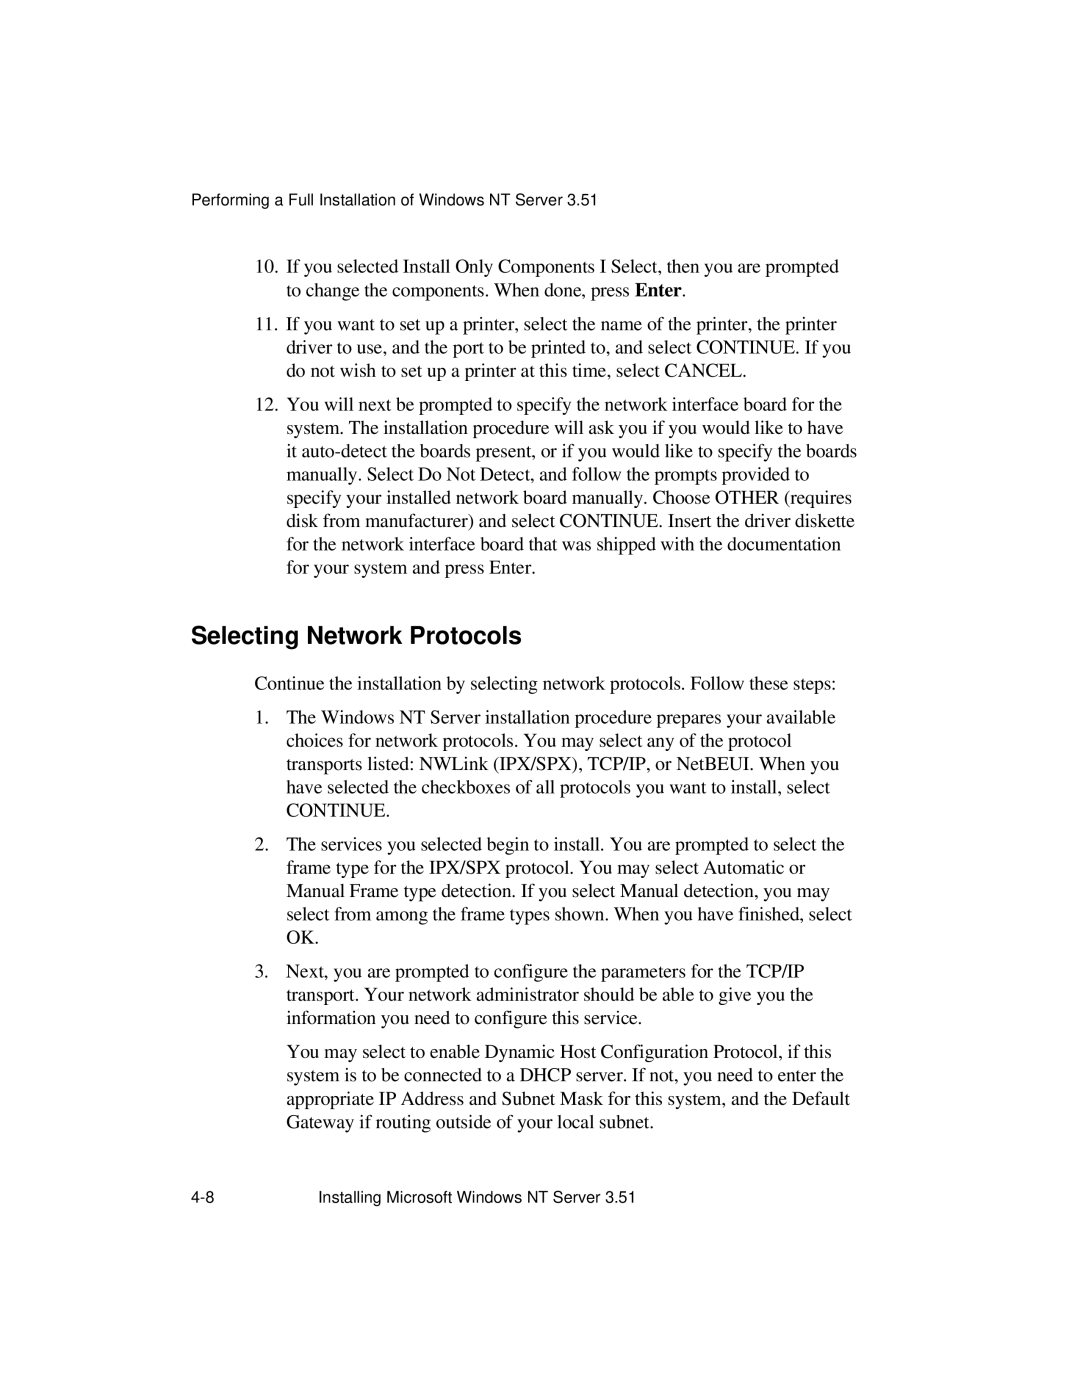 NCR S16 manual Selecting Network Protocols 